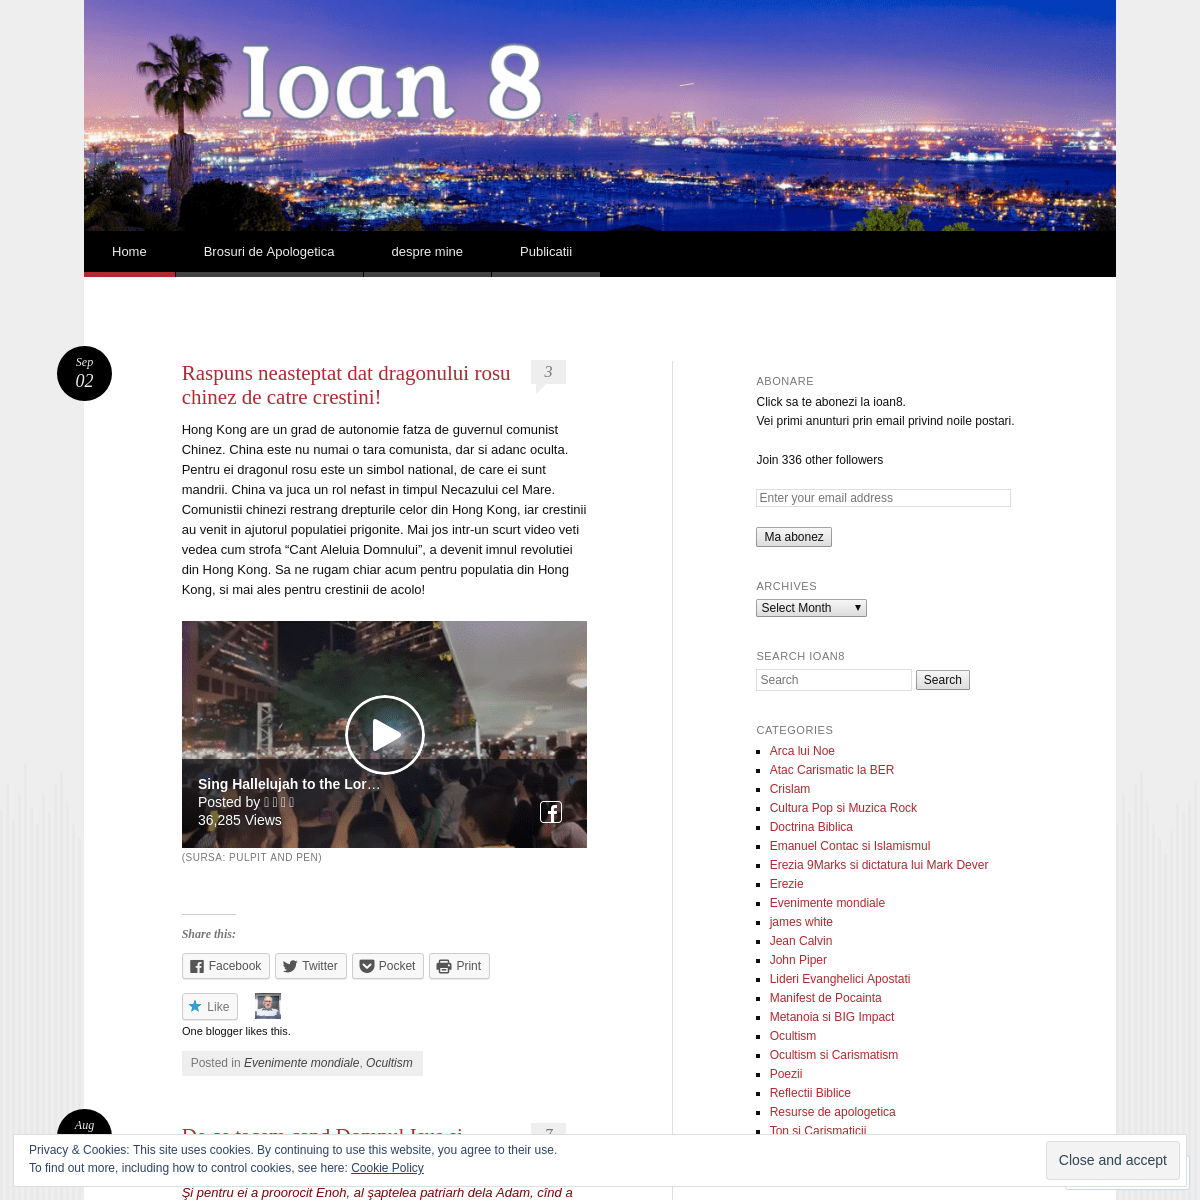 A complete backup of ioan8.wordpress.com